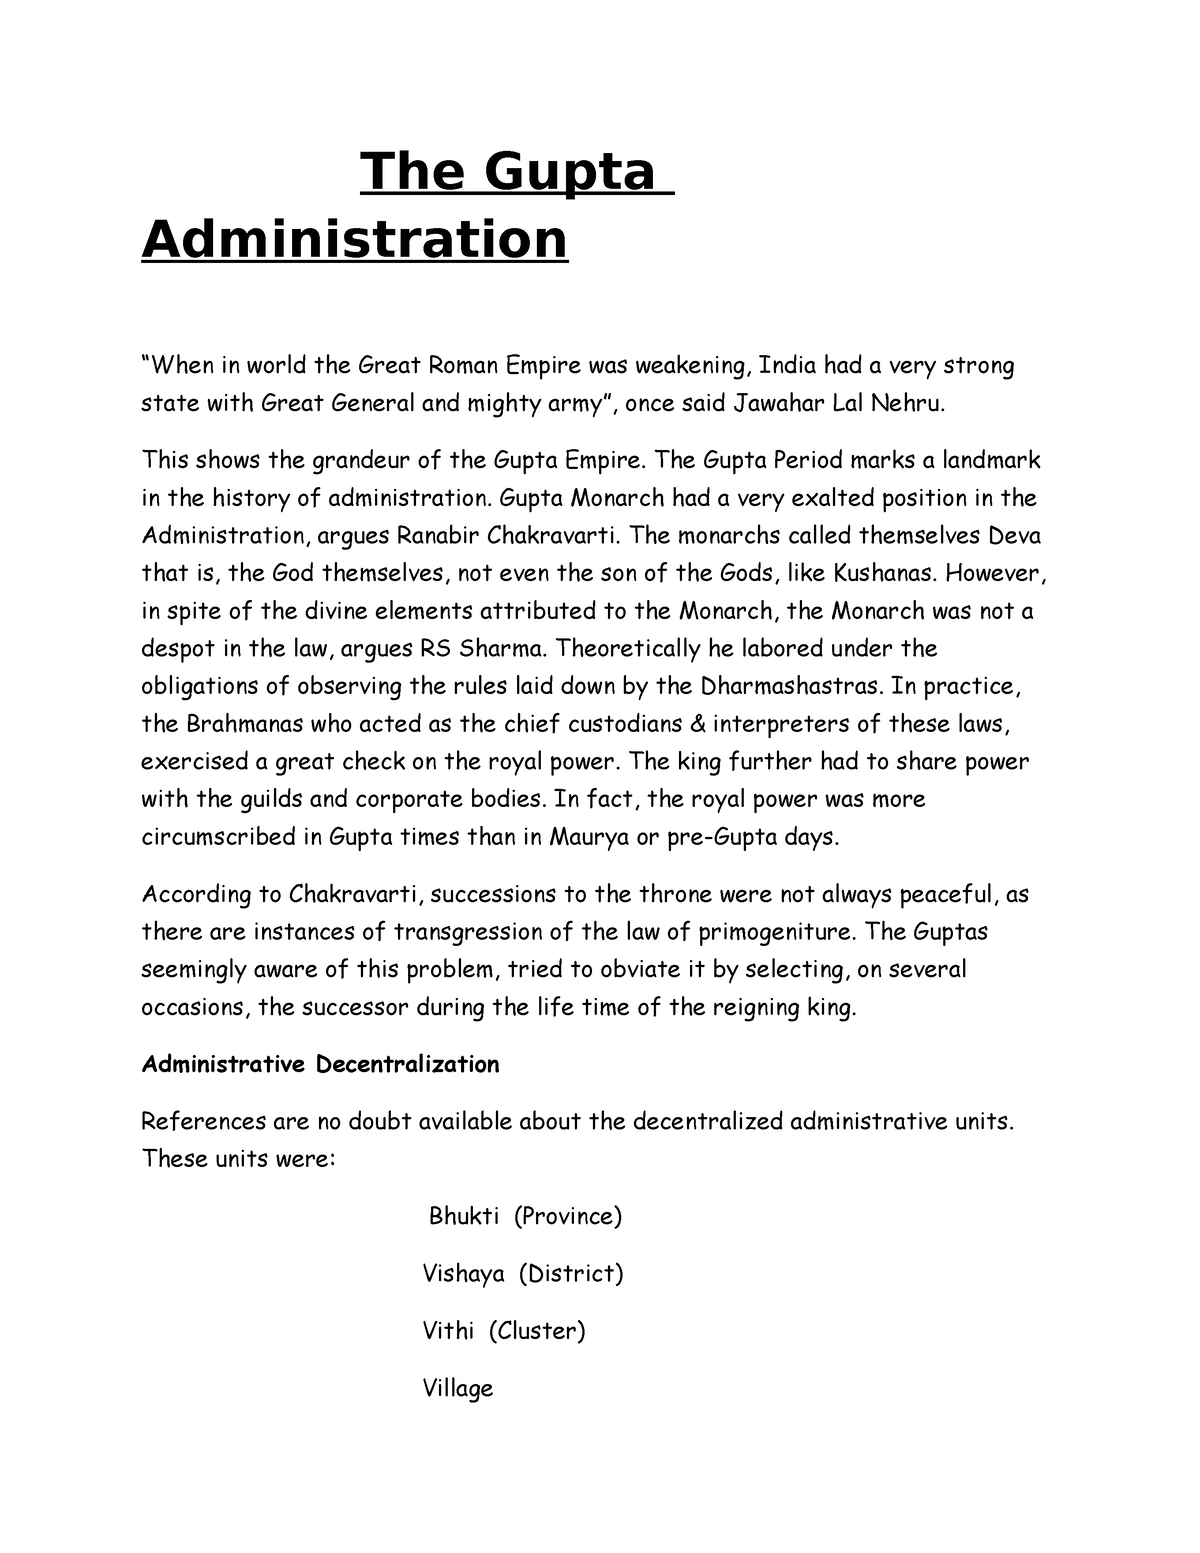 essay on gupta administration